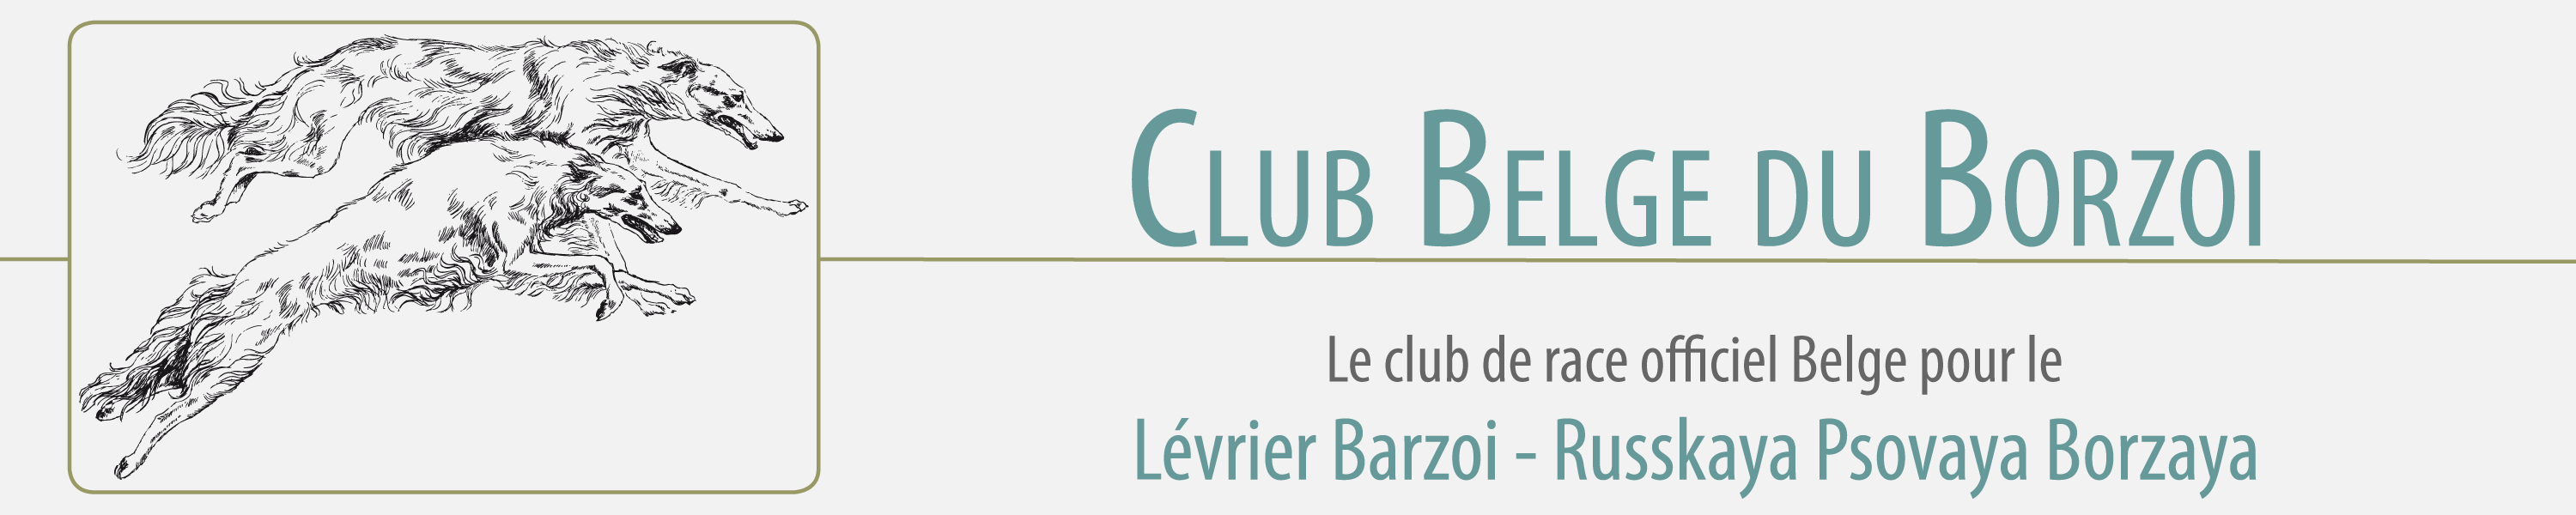 Club Belge du Borzoï